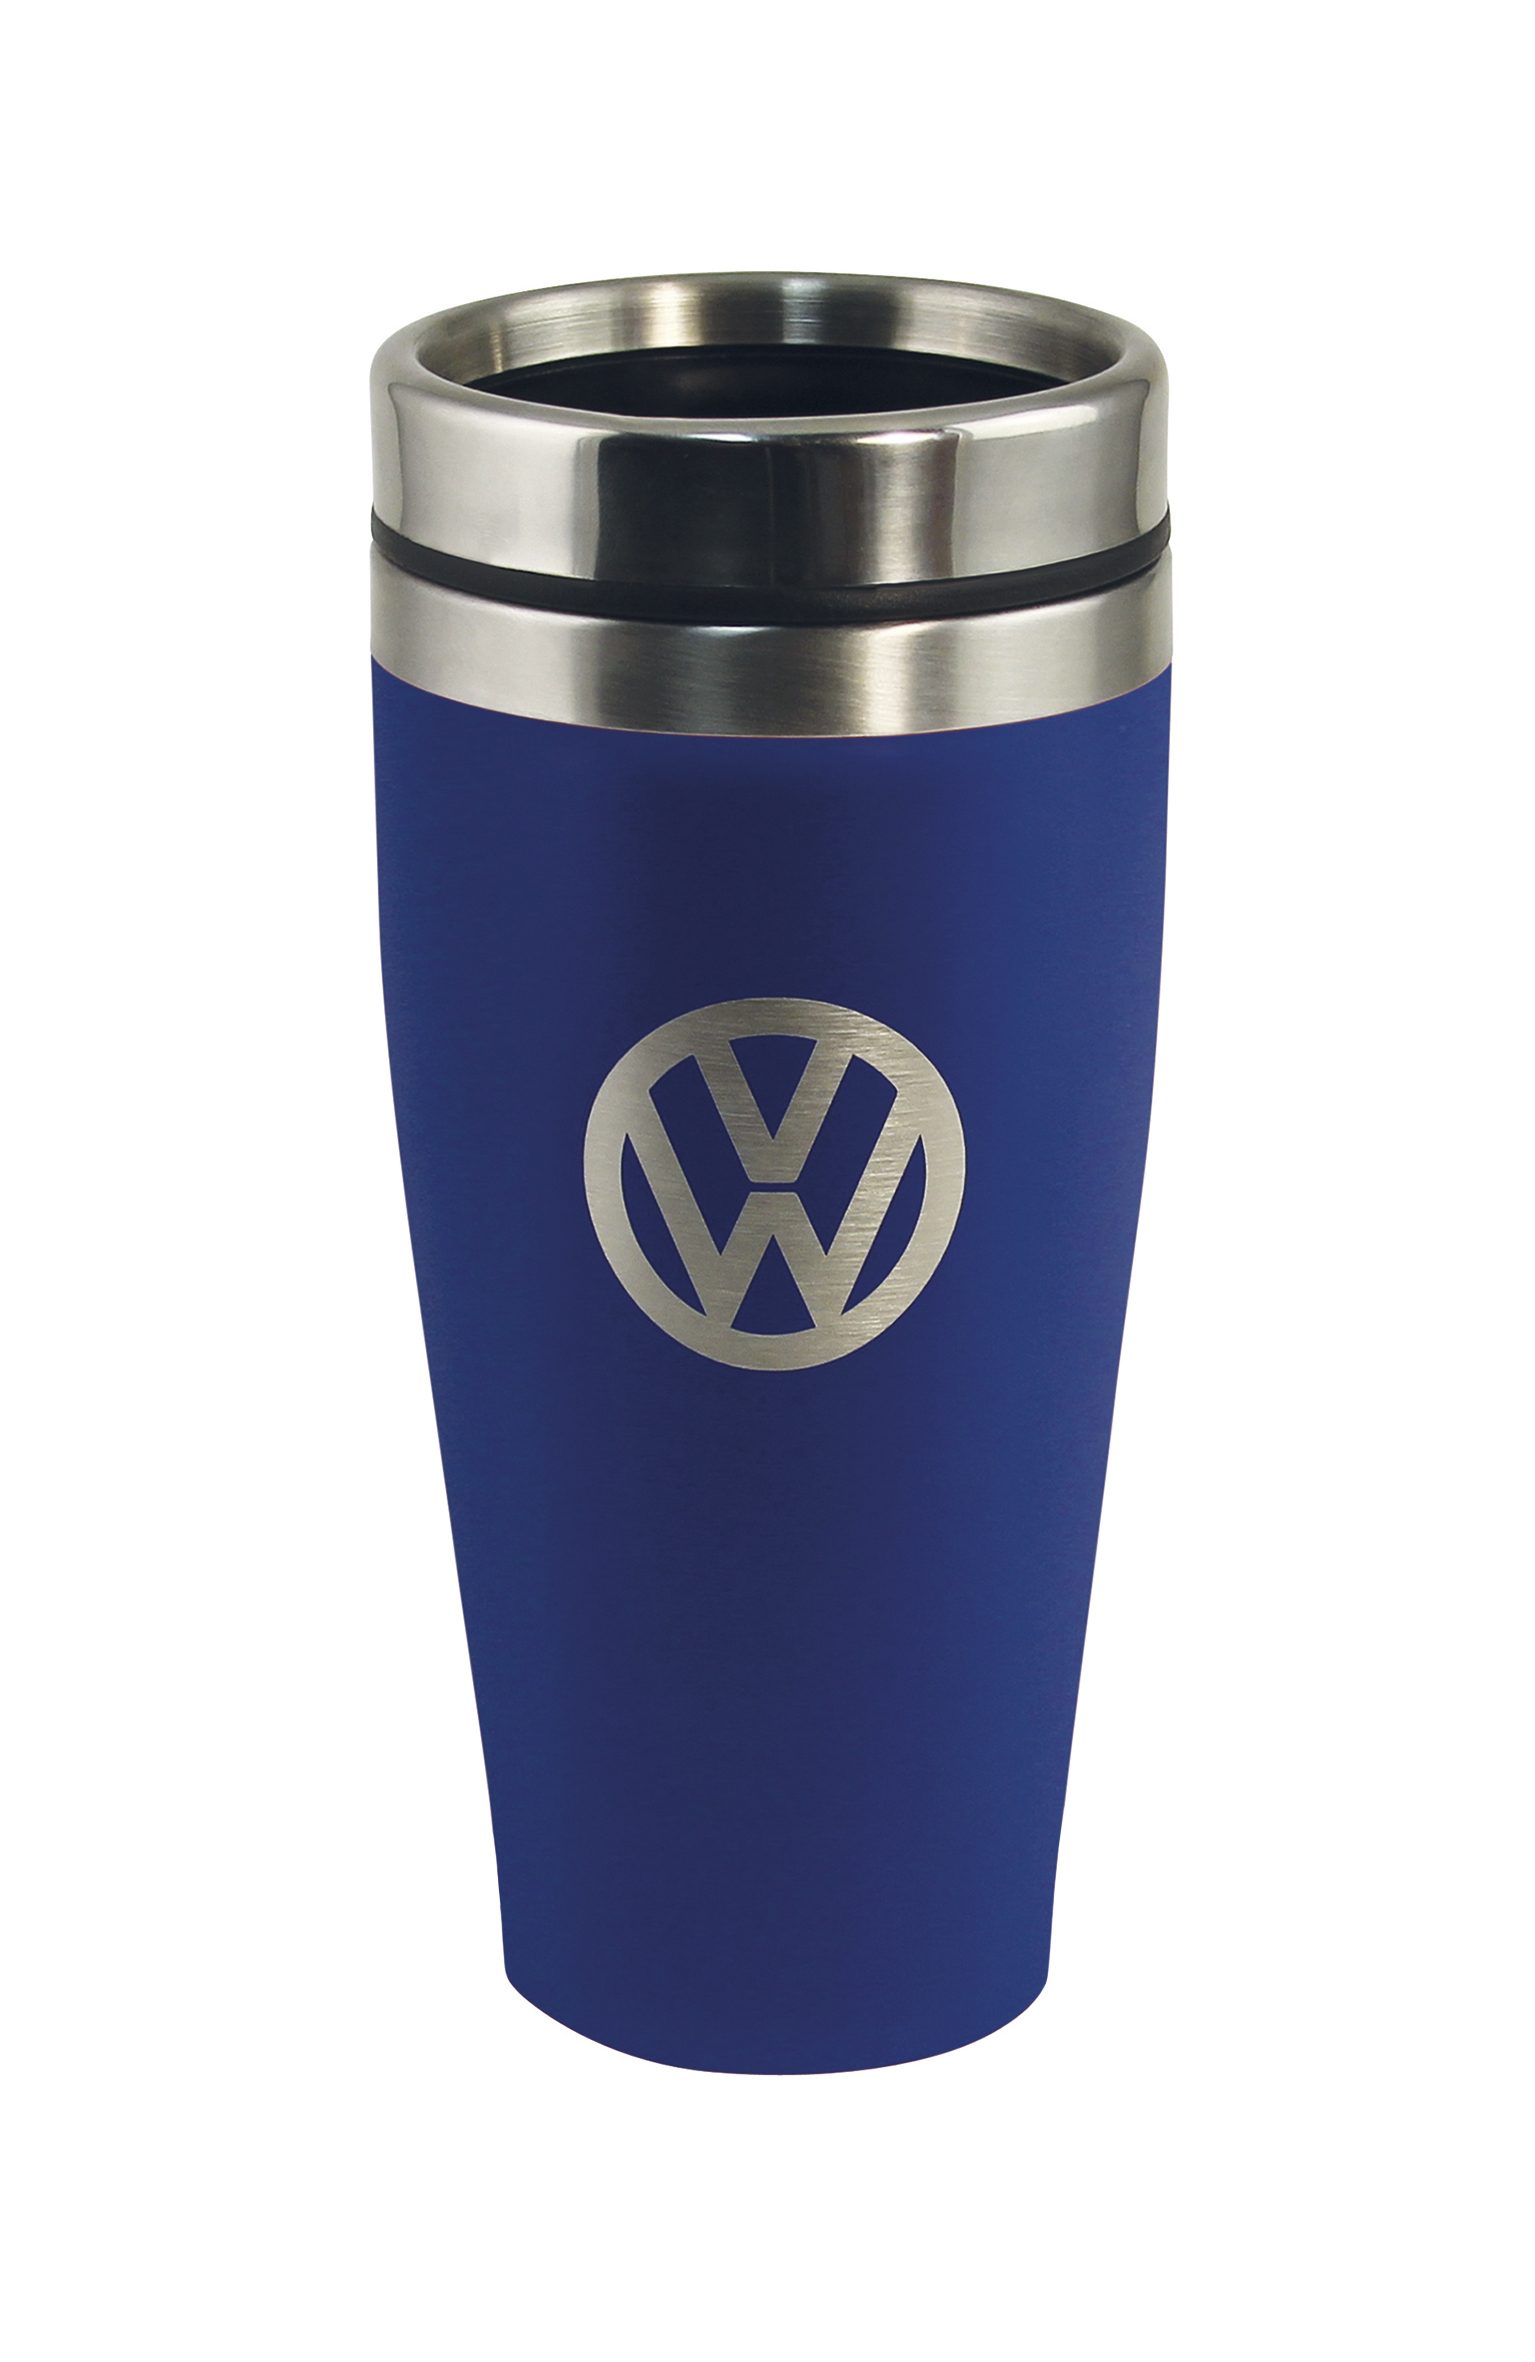 VW Edelstahl Thermo-Becher, doppelwandig, 450ml